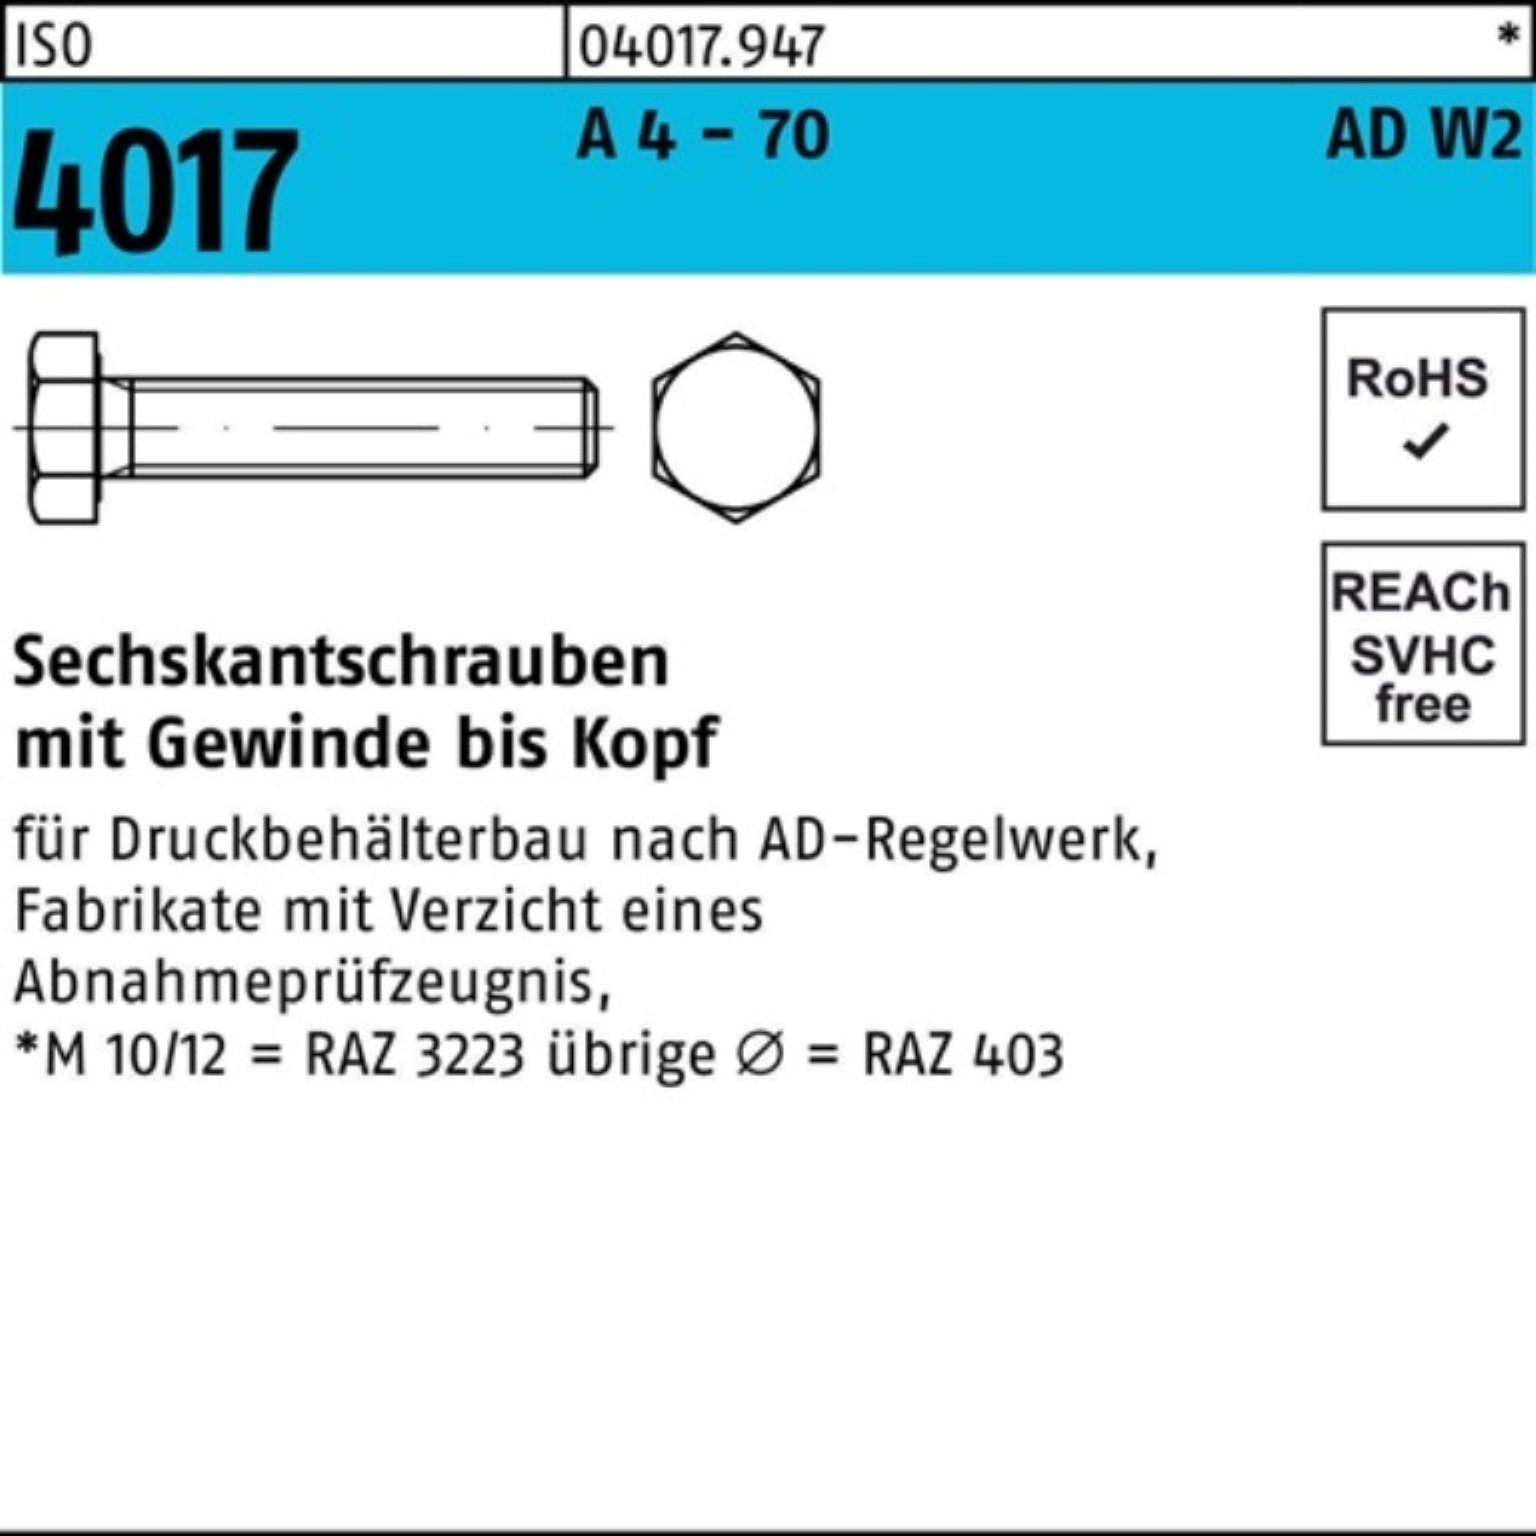 Bufab Sechskantschraube 100er Pack Sechskantschraube ISO 4017 VG M12x 50 A 4 - 70 AD-W2 50 St